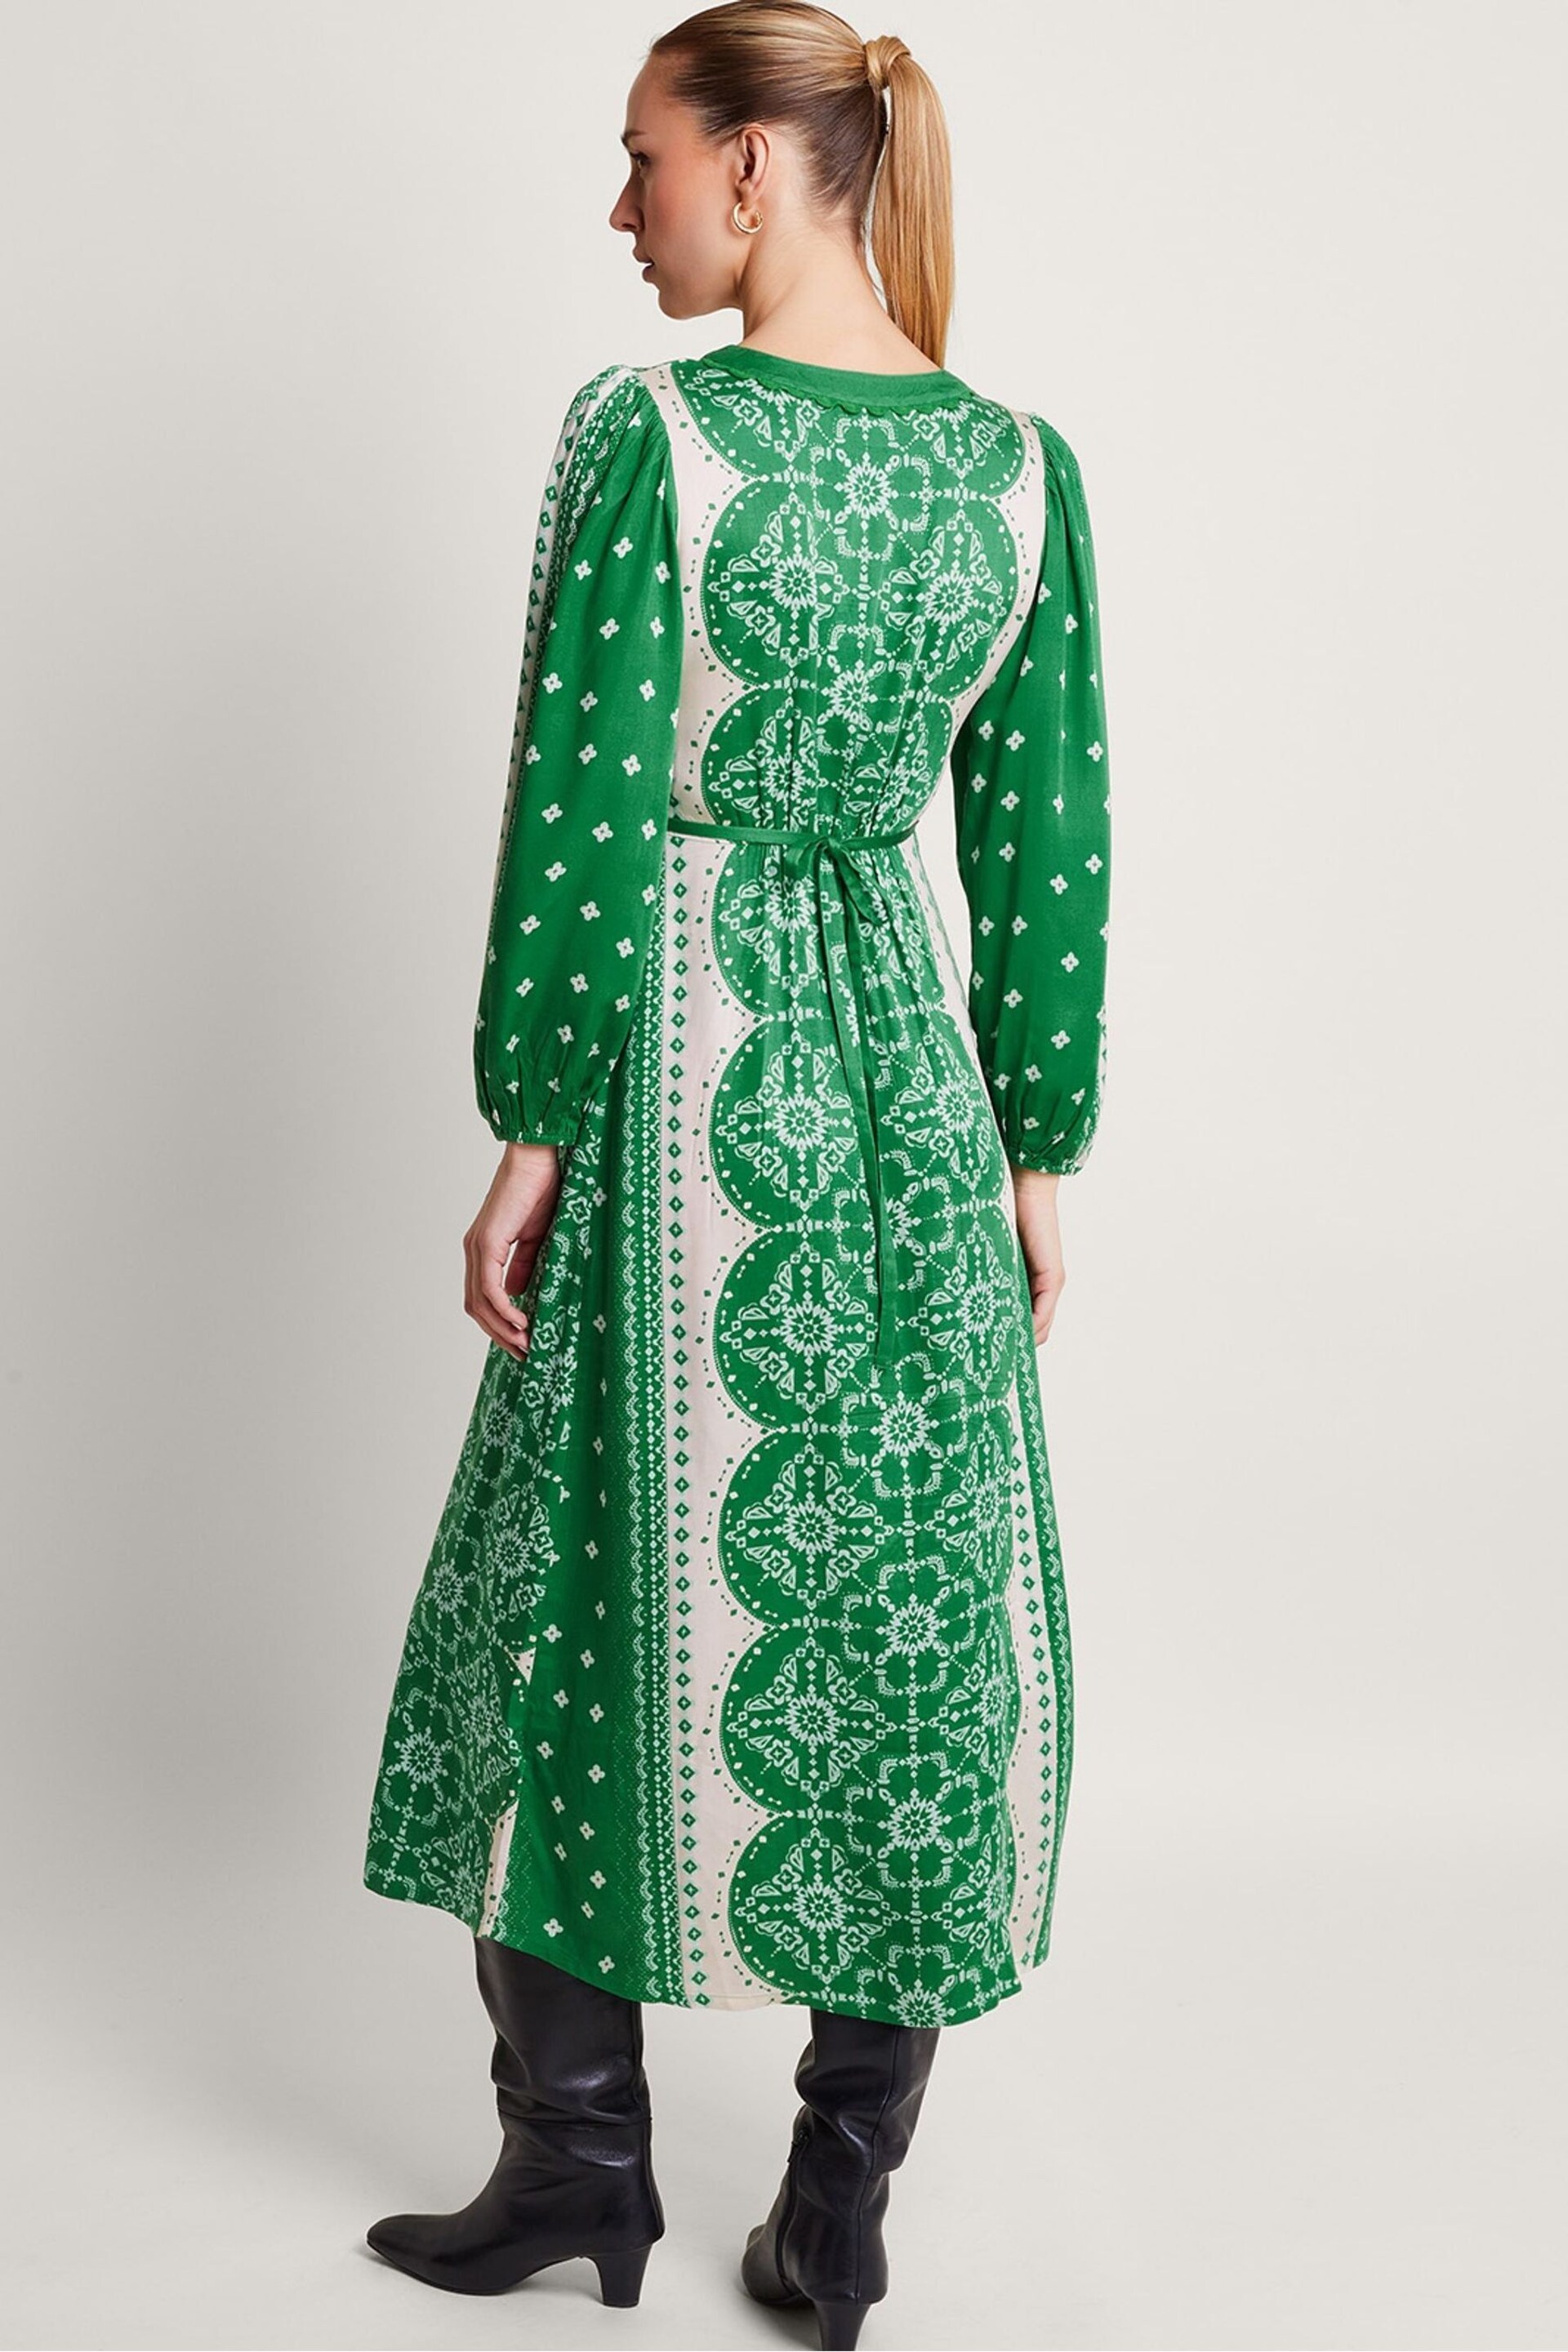 Monsoon Green Tamsyn Print Tea Dress - Image 2 of 5